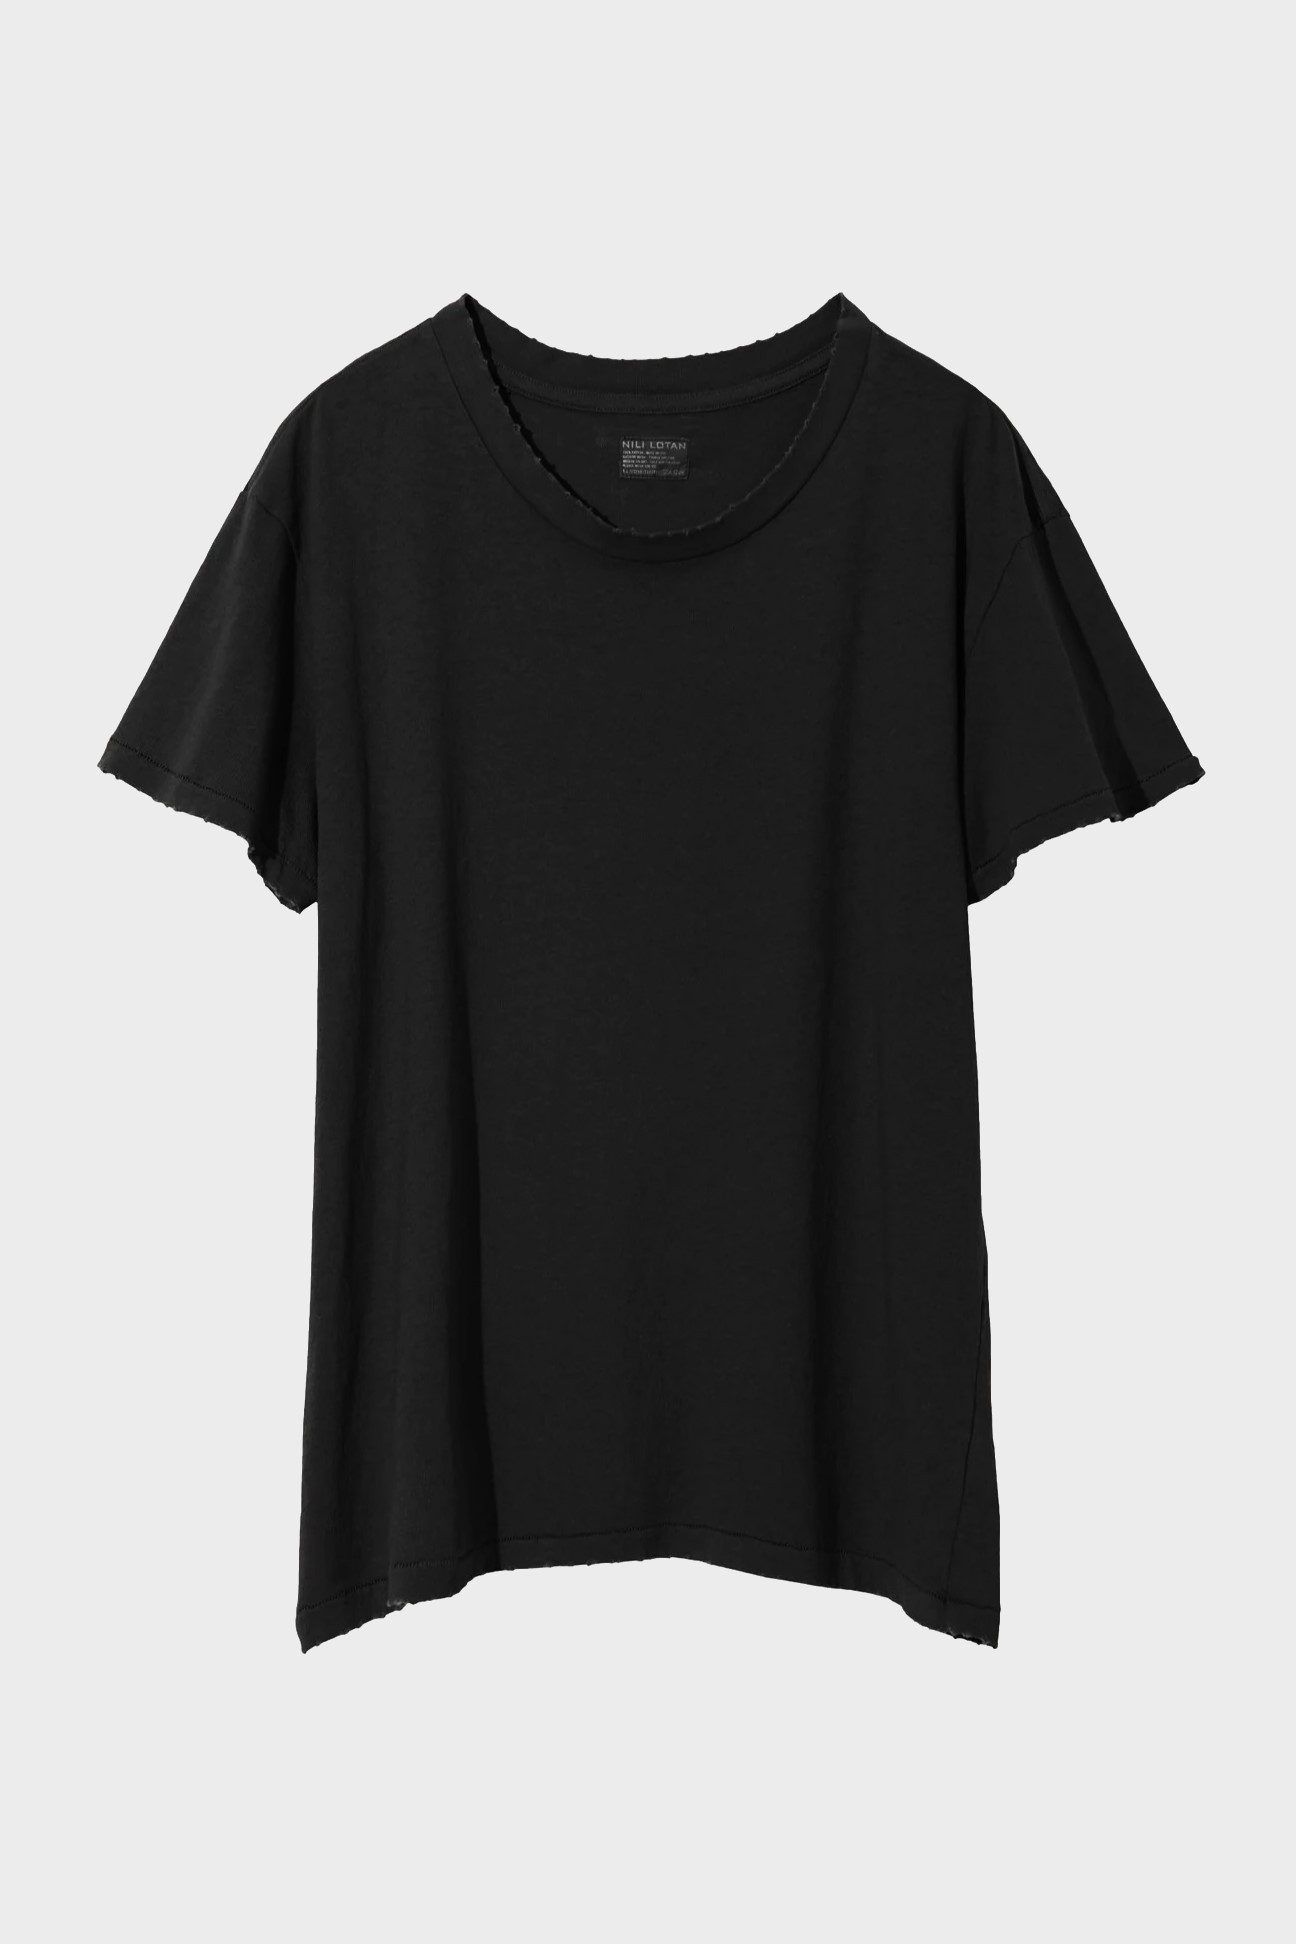 NILI LOTAN Brady T-Shirt Washed Black